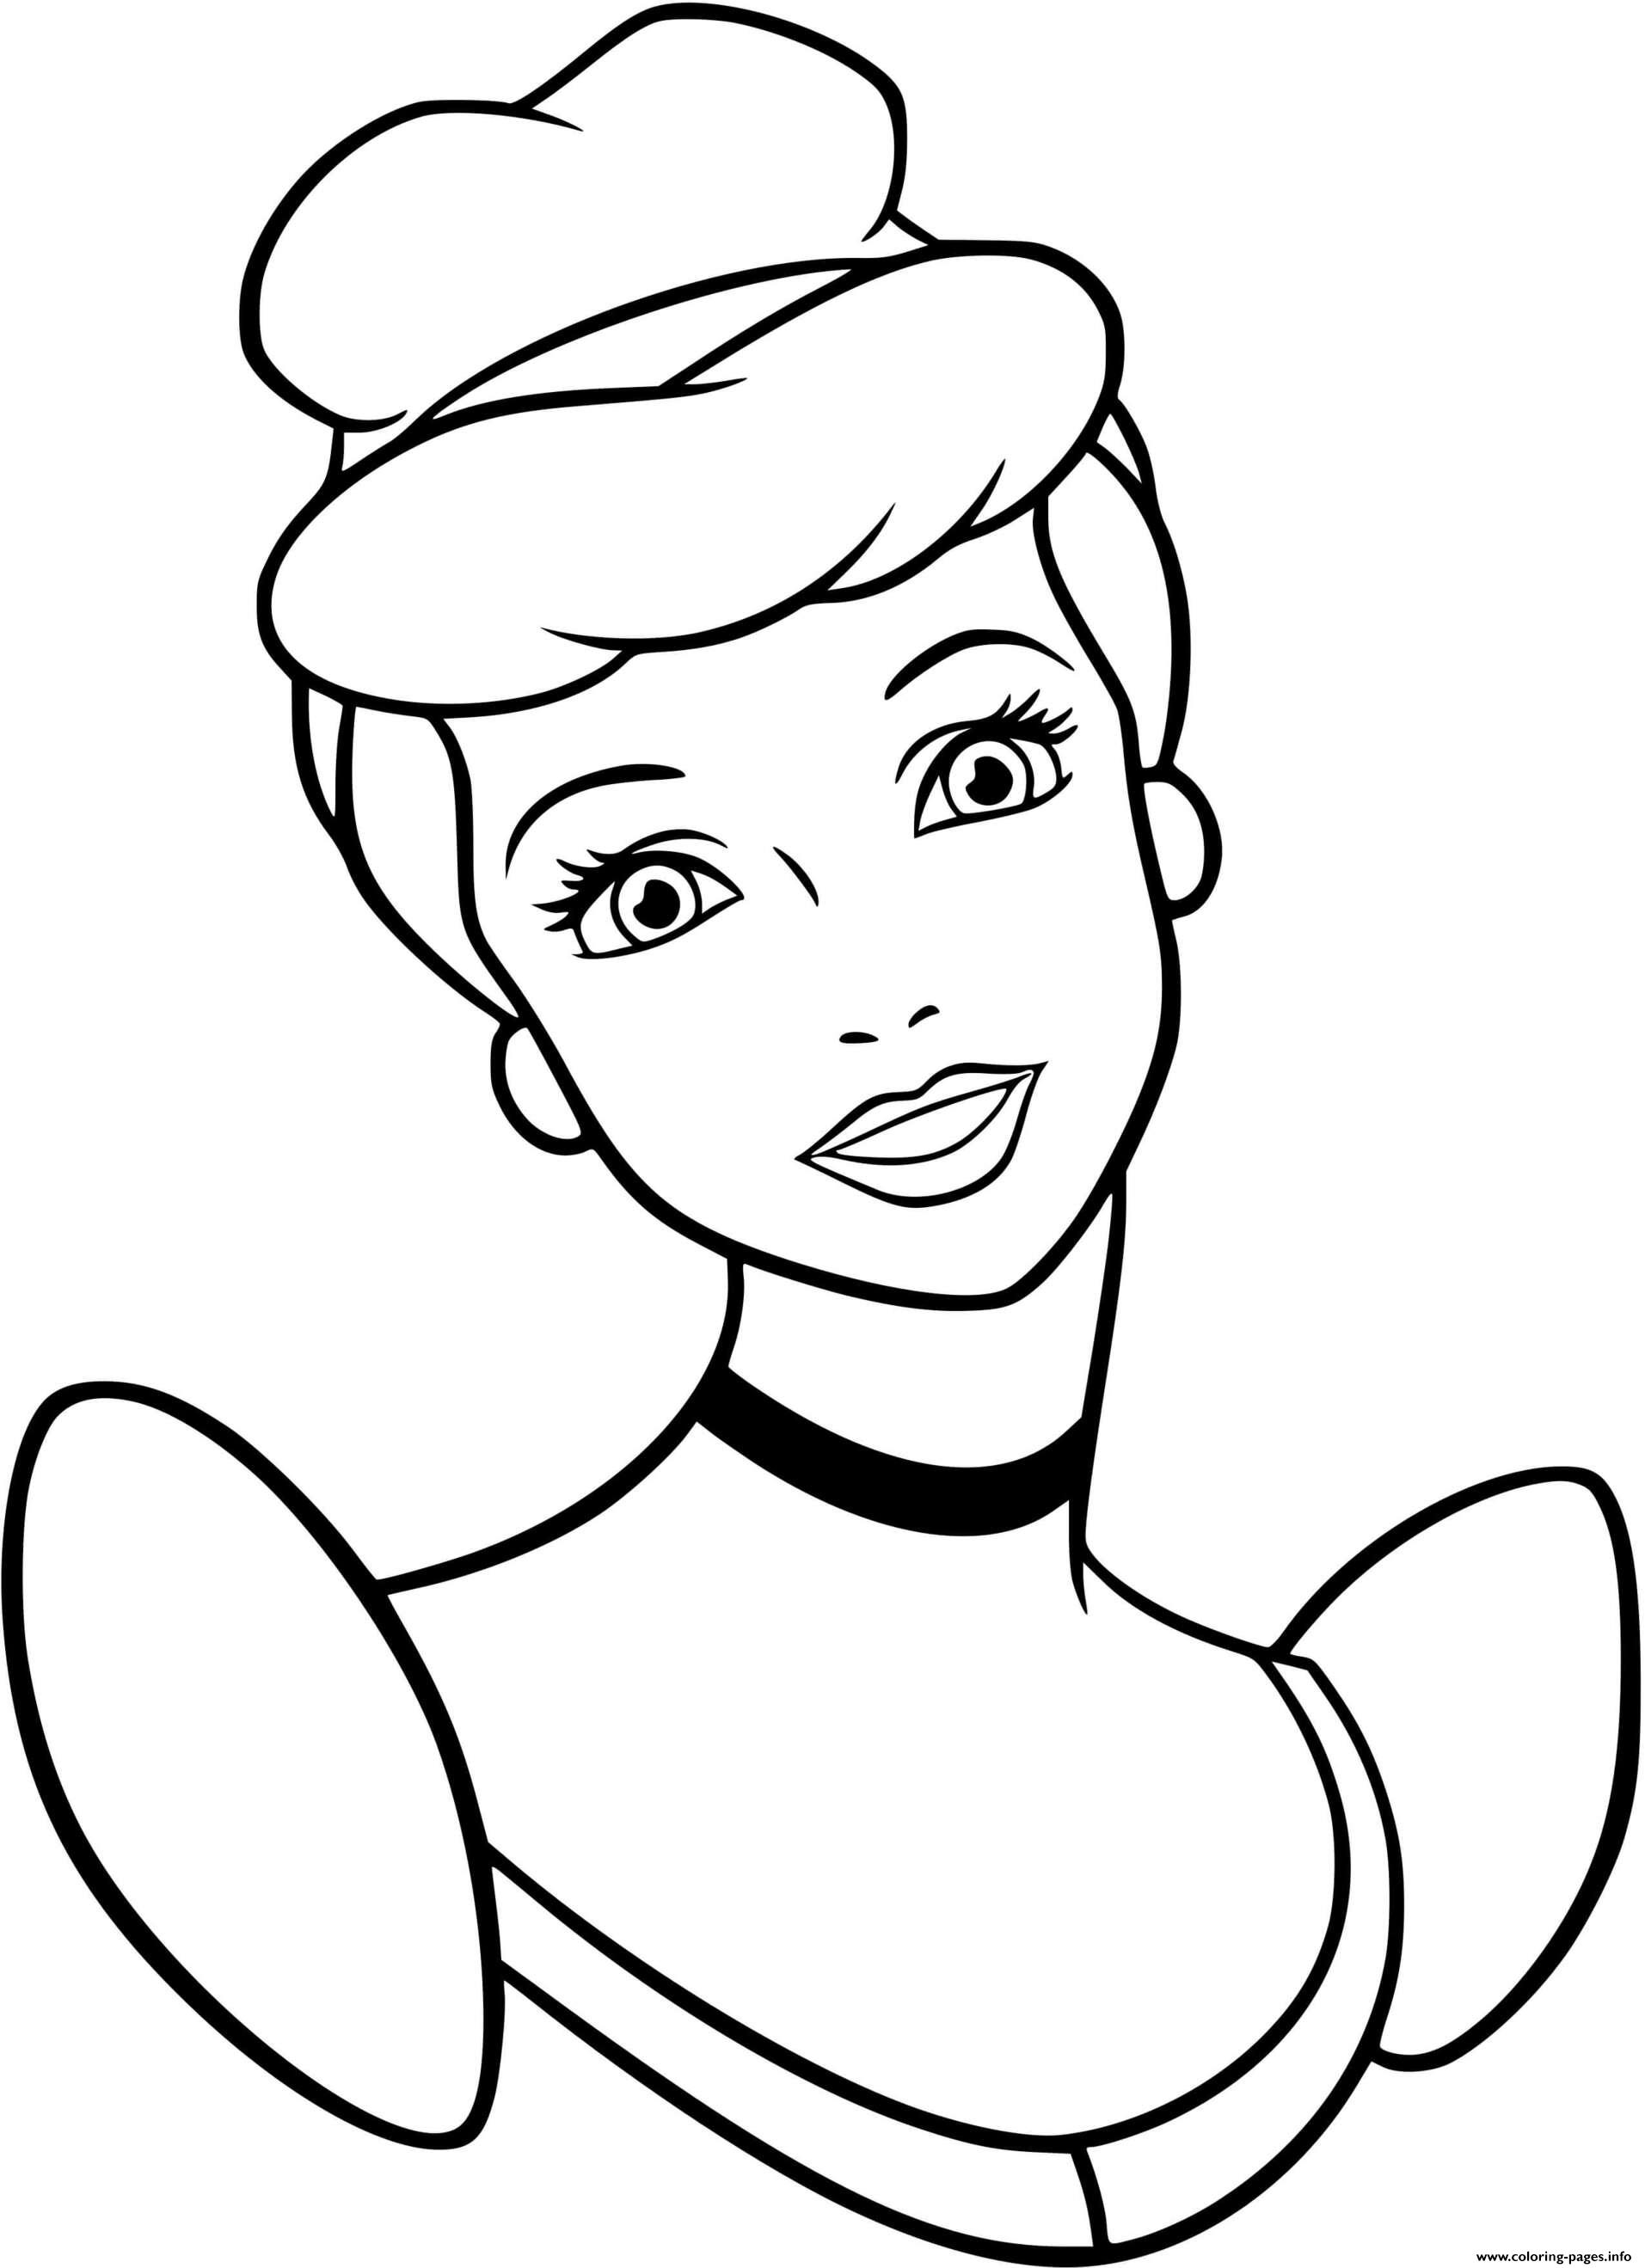 Disney Princess Cindrella coloring